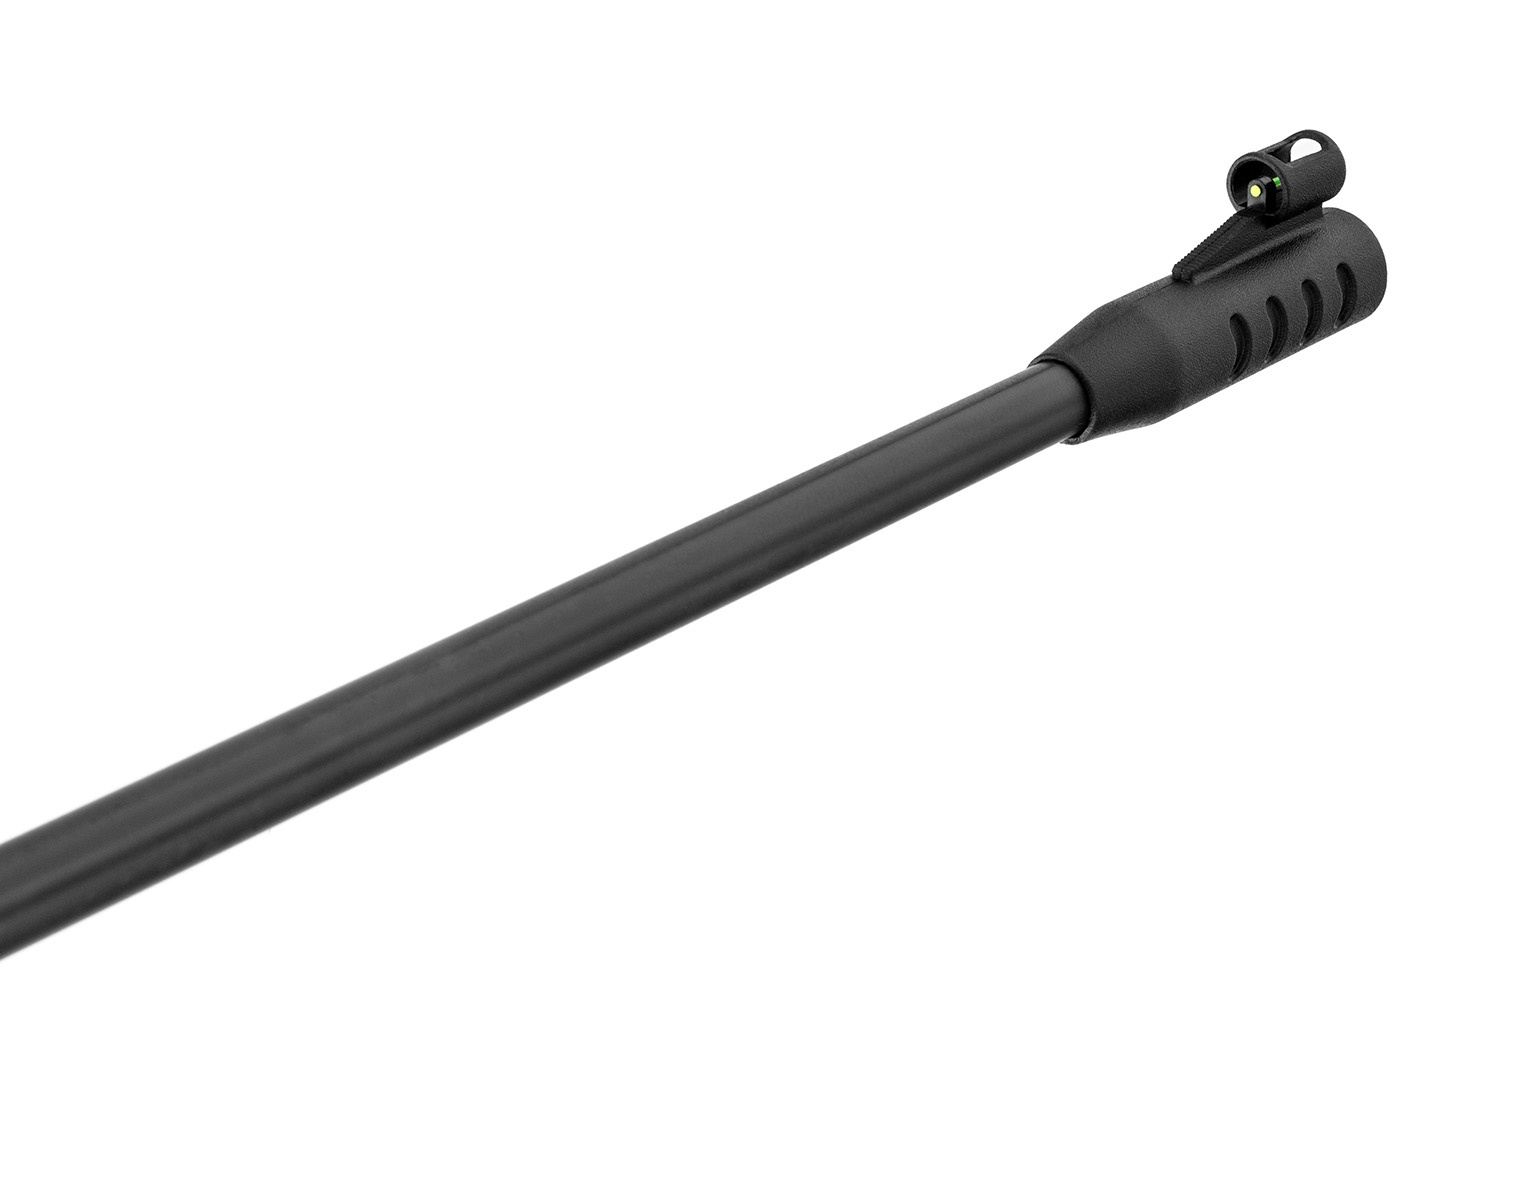 Cybergun TG-1 Swiss Arms Carabine 4.5 mm AirGun plus 4x40 Scope - BK